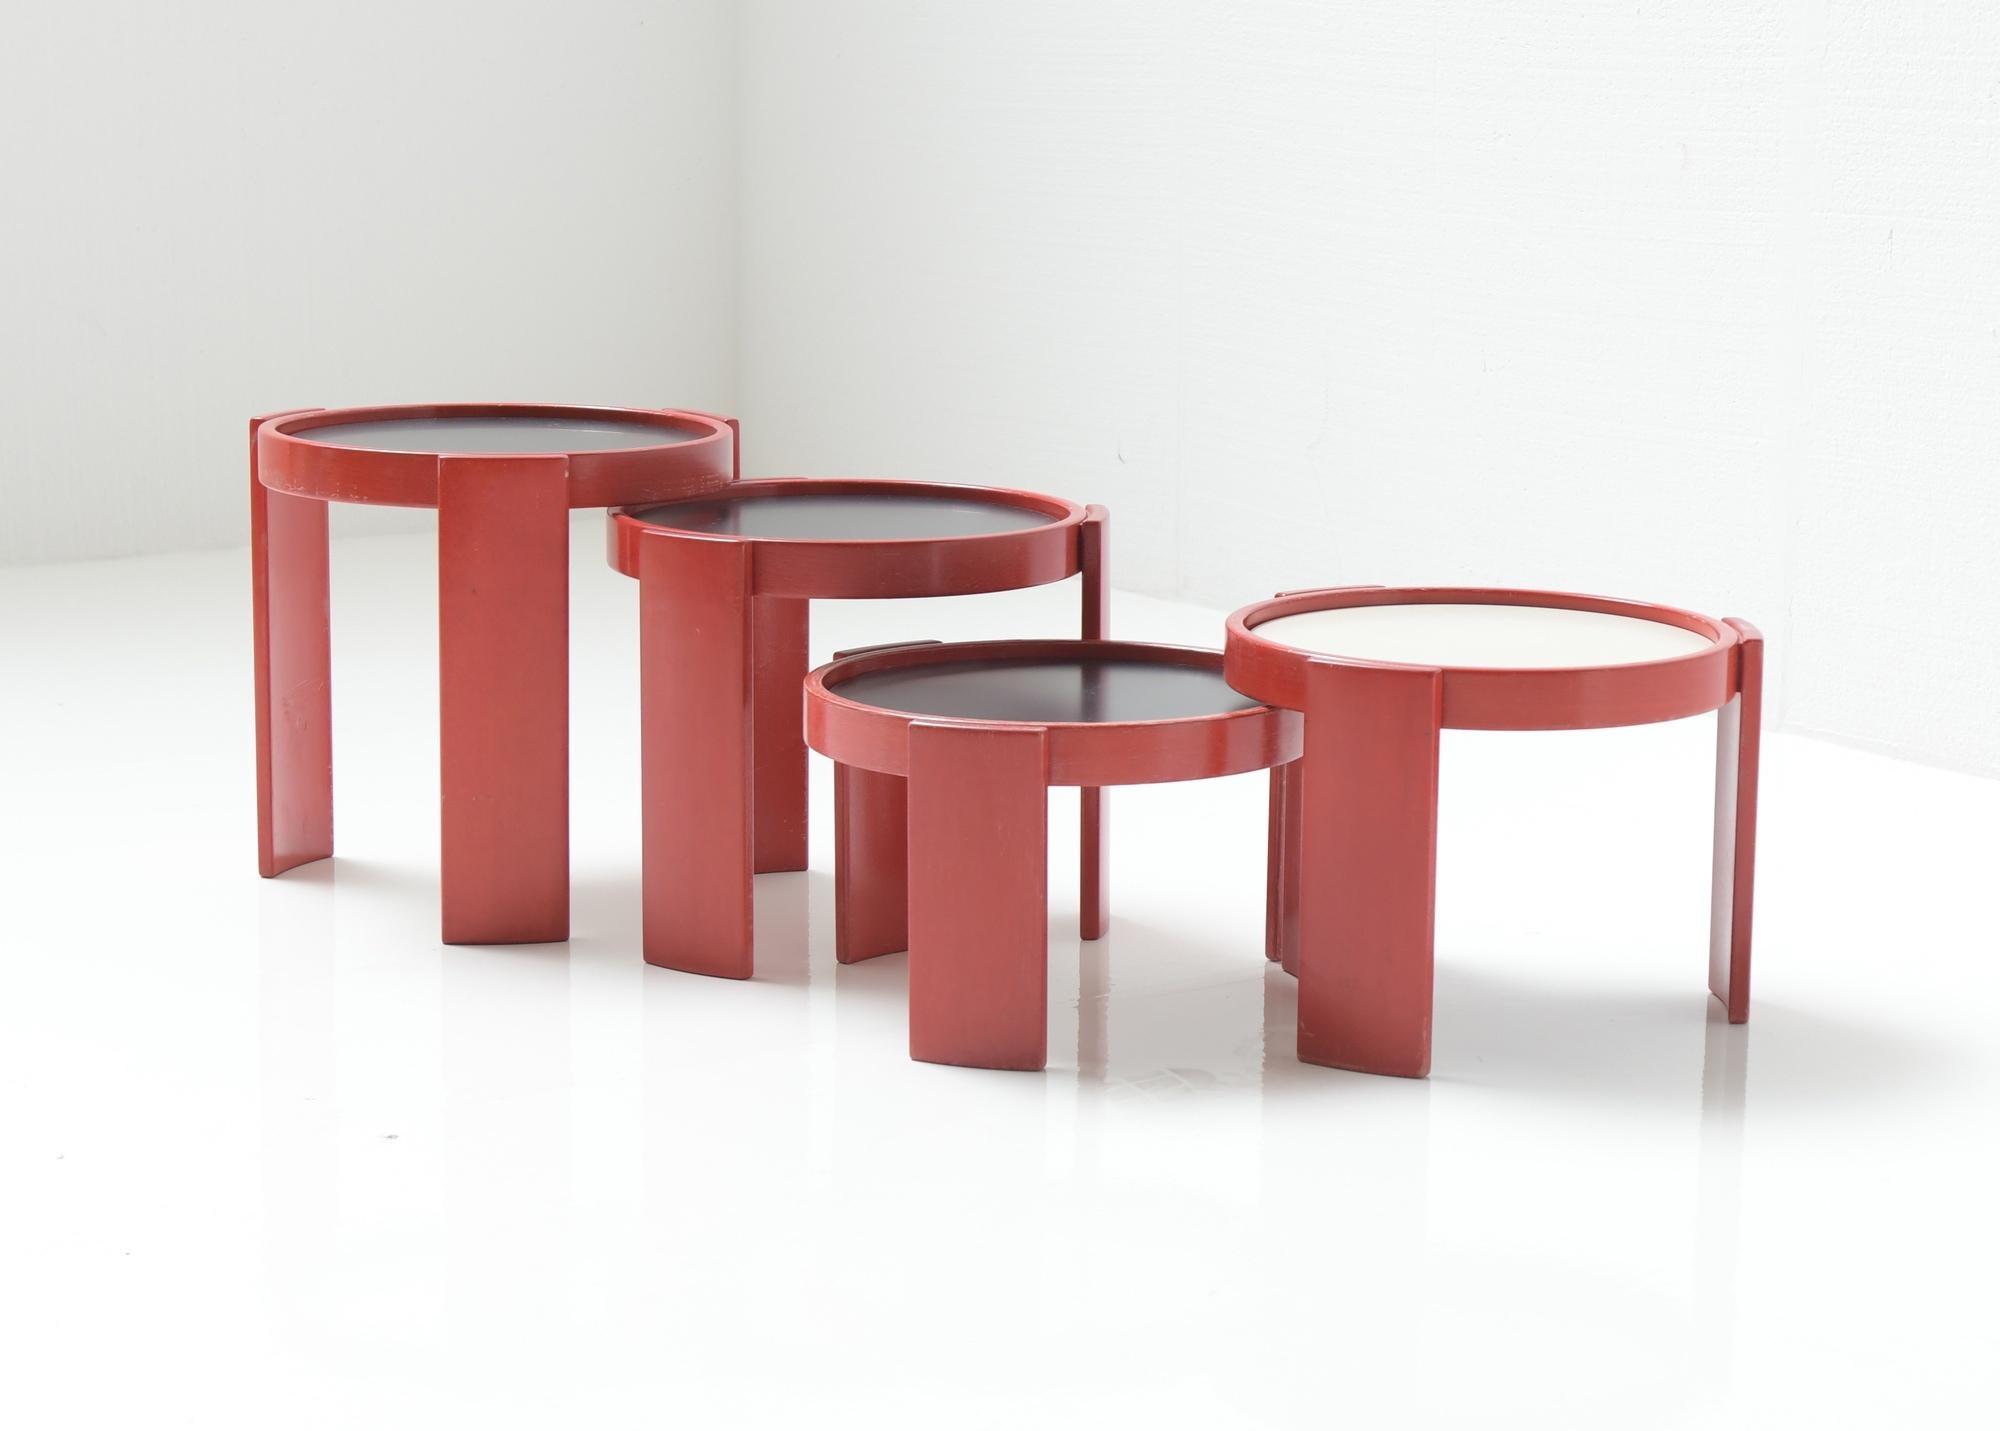 Italian Stunning Nesting Tables 780 in Very Rare Red, Gianfranco Frattini, Cassina